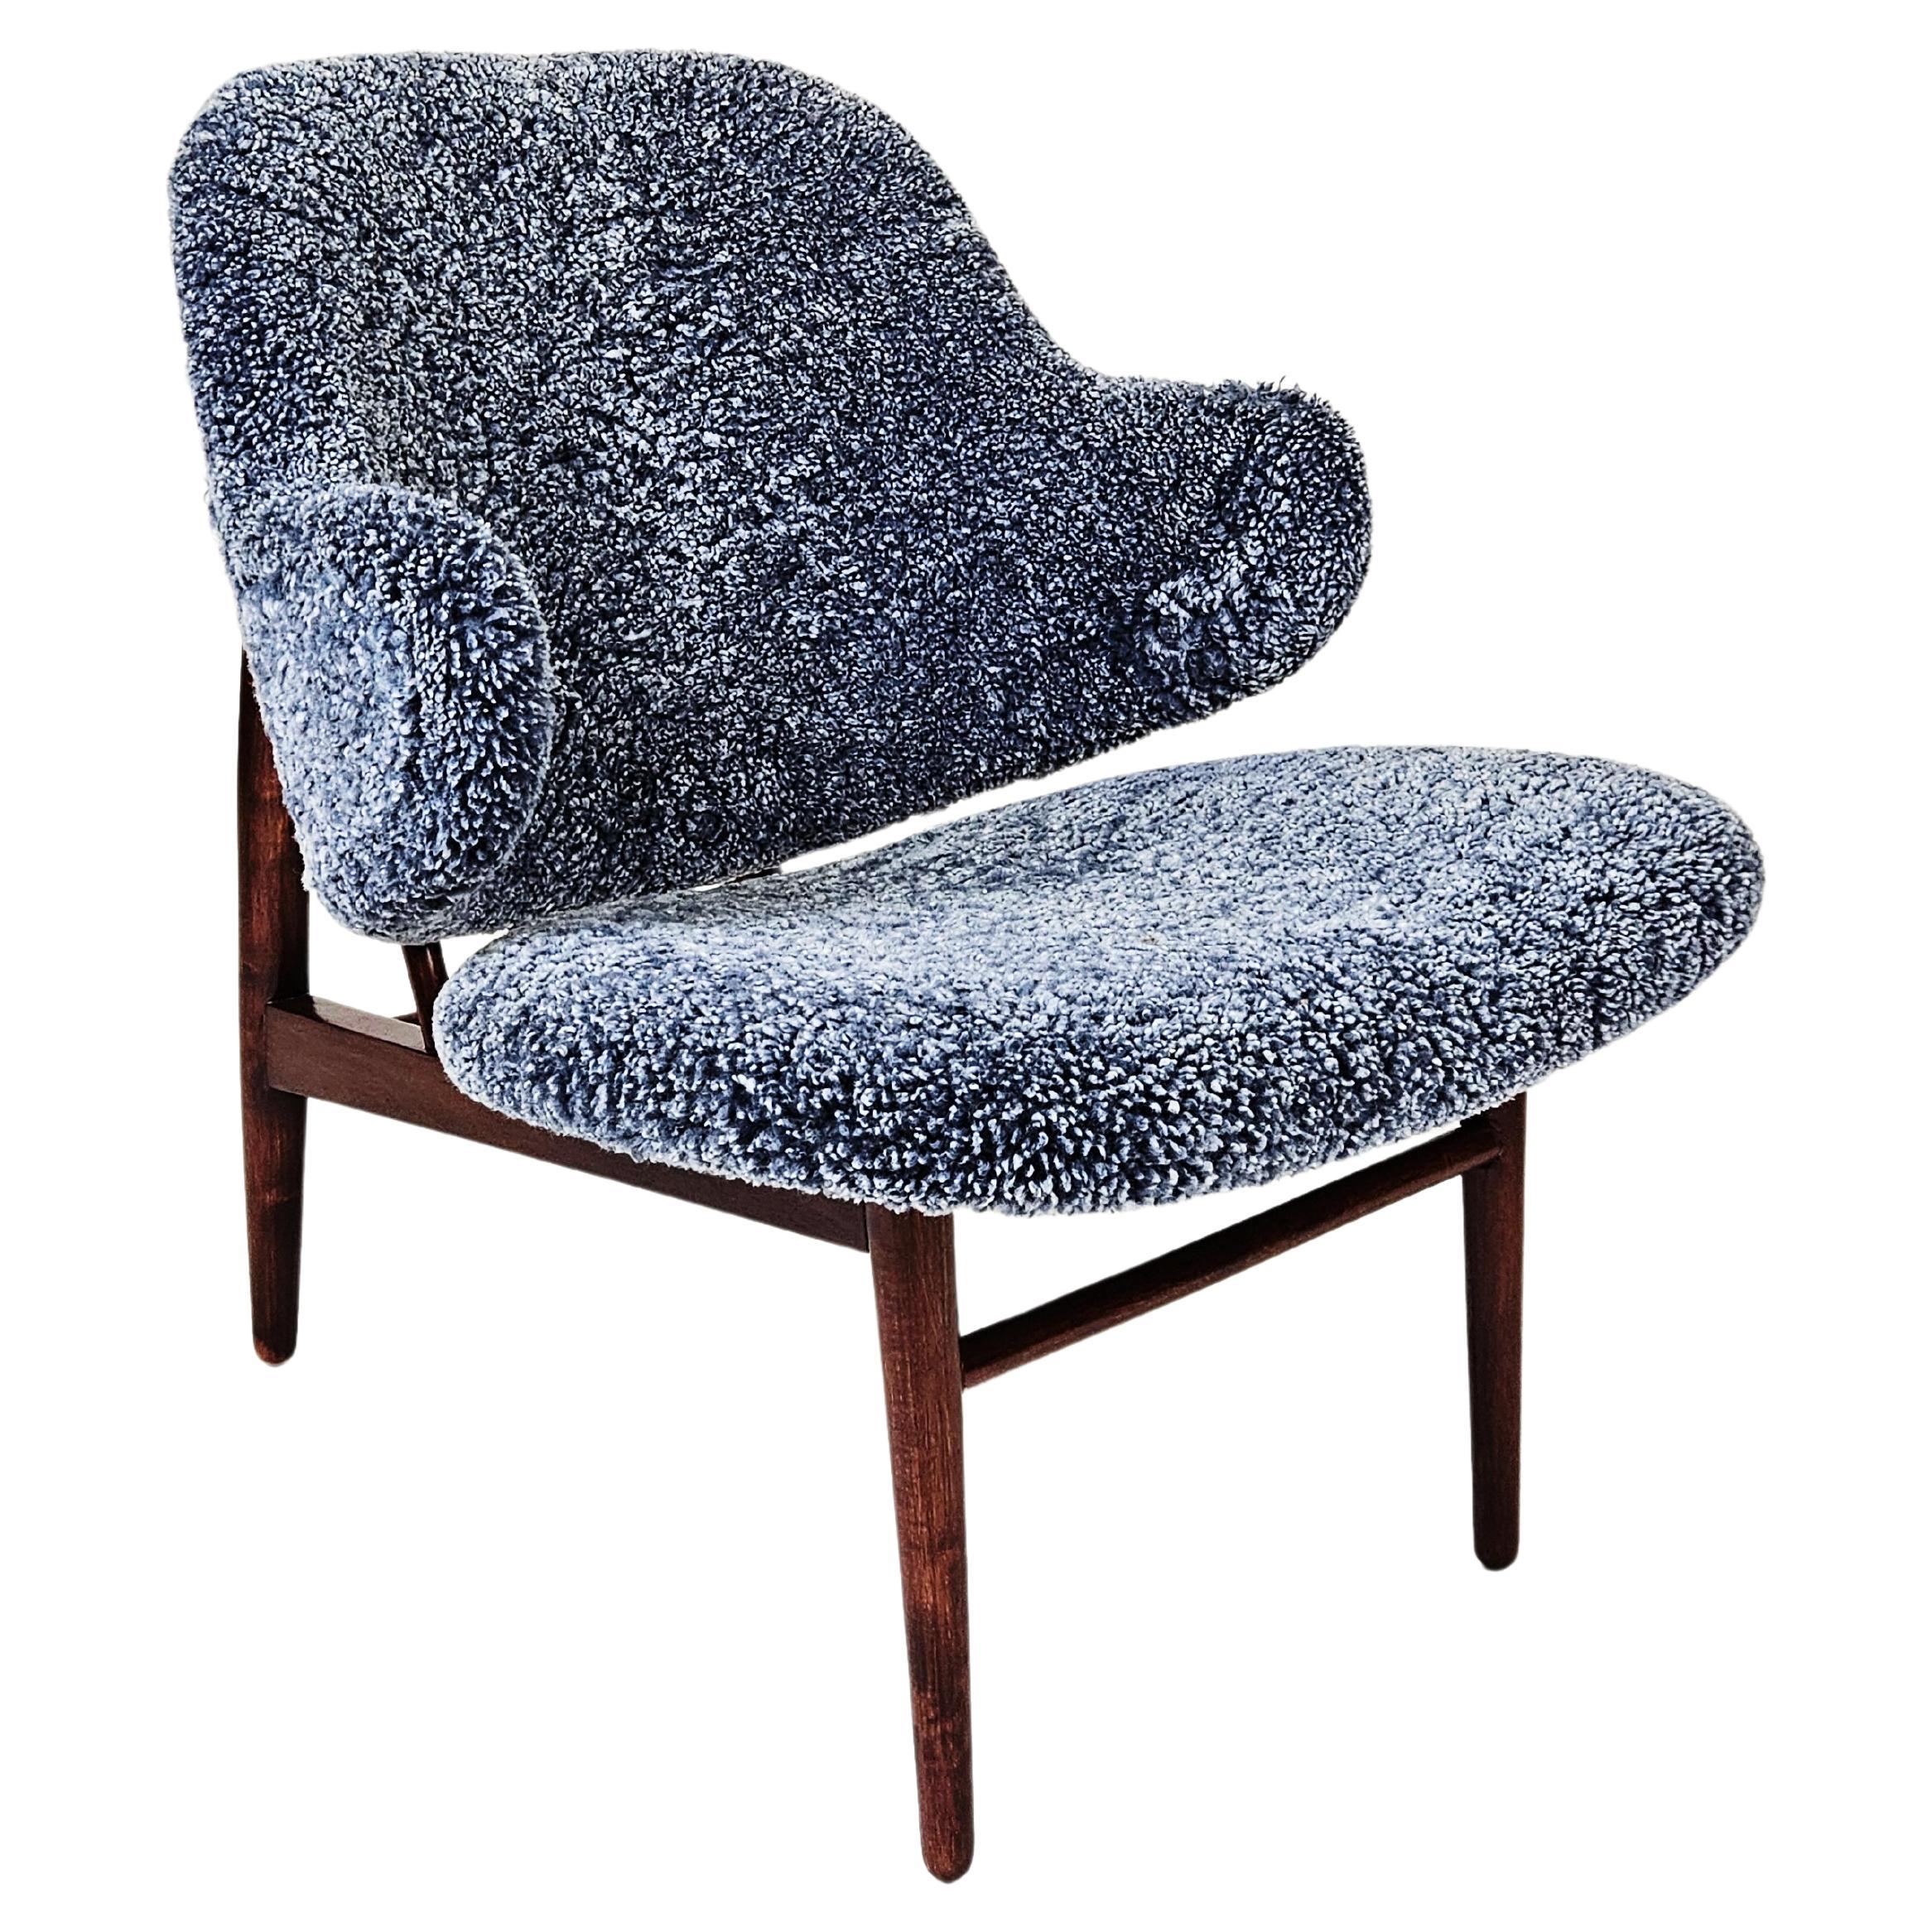 Rare Scandinavian Modern shell chair by IB Kofod Larsen, Denmark, 1950s For Sale